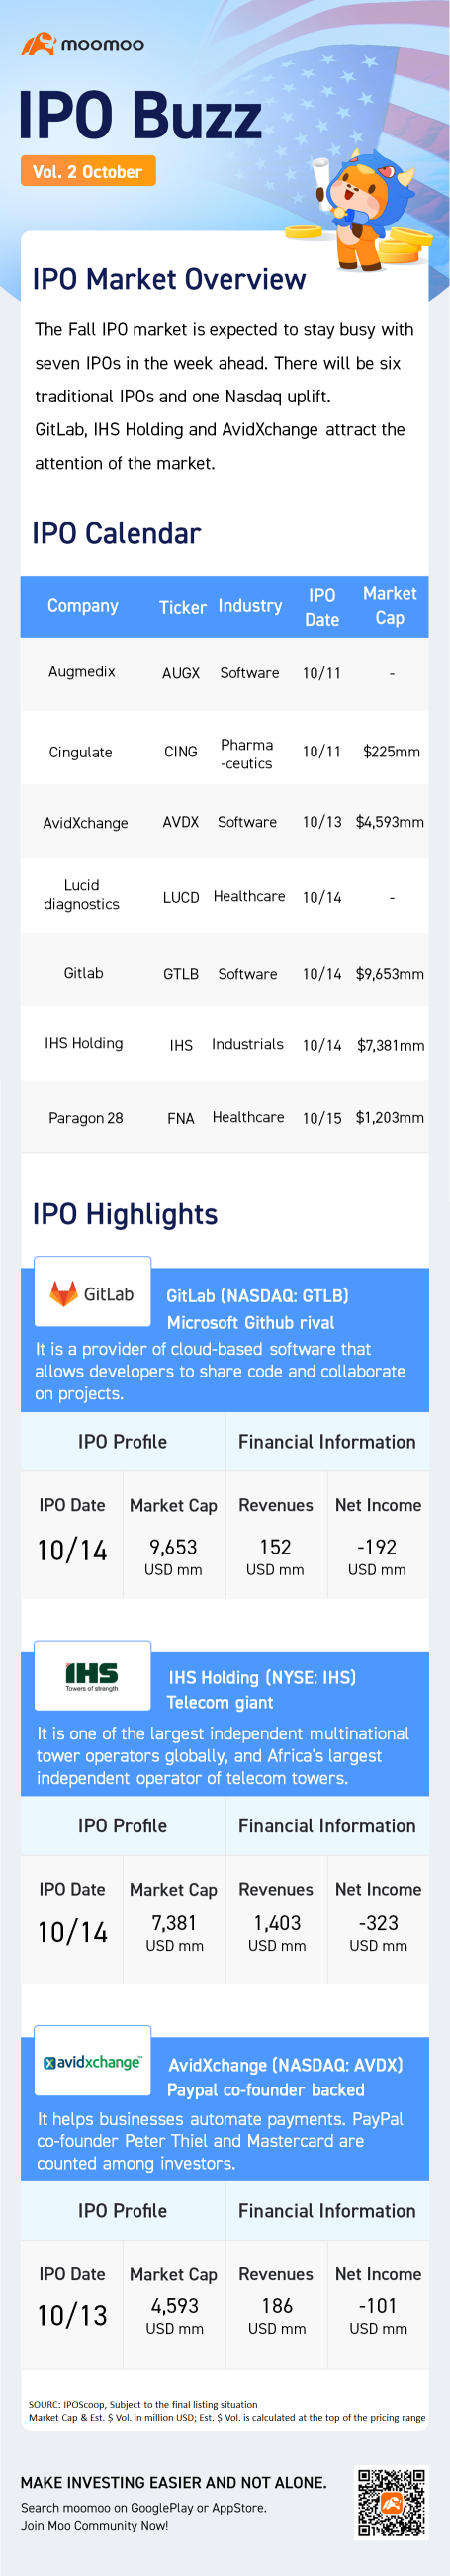 首次公開招股熱門 | 微軟 github 競爭對手 gitlab 在 7 個 IPO 週上前